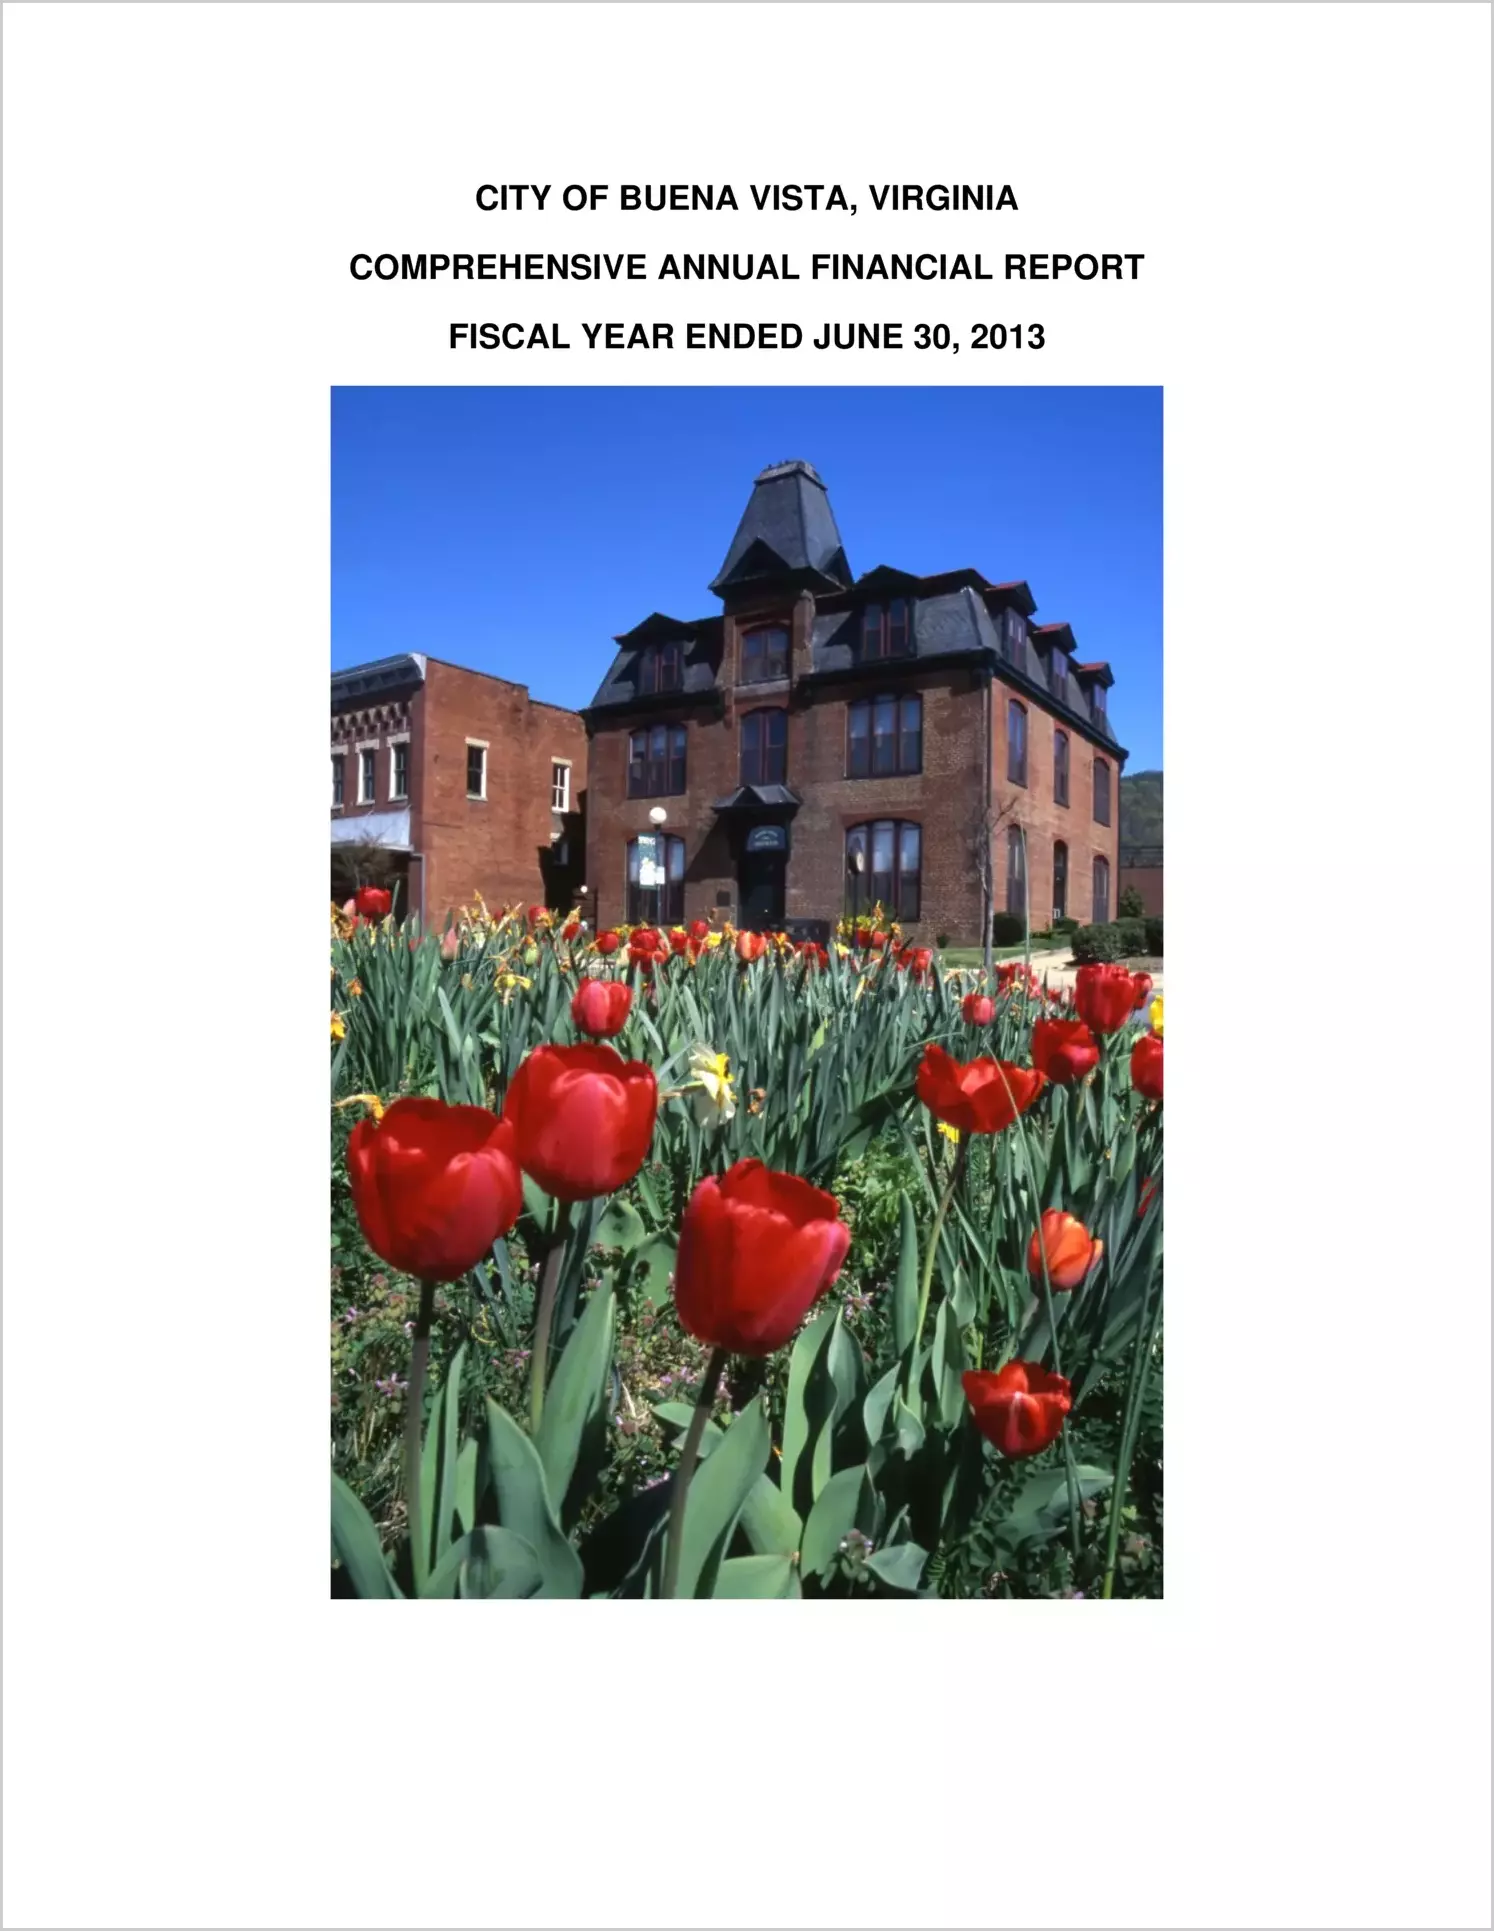 2013 Annual Financial Report for City of Buena Vista